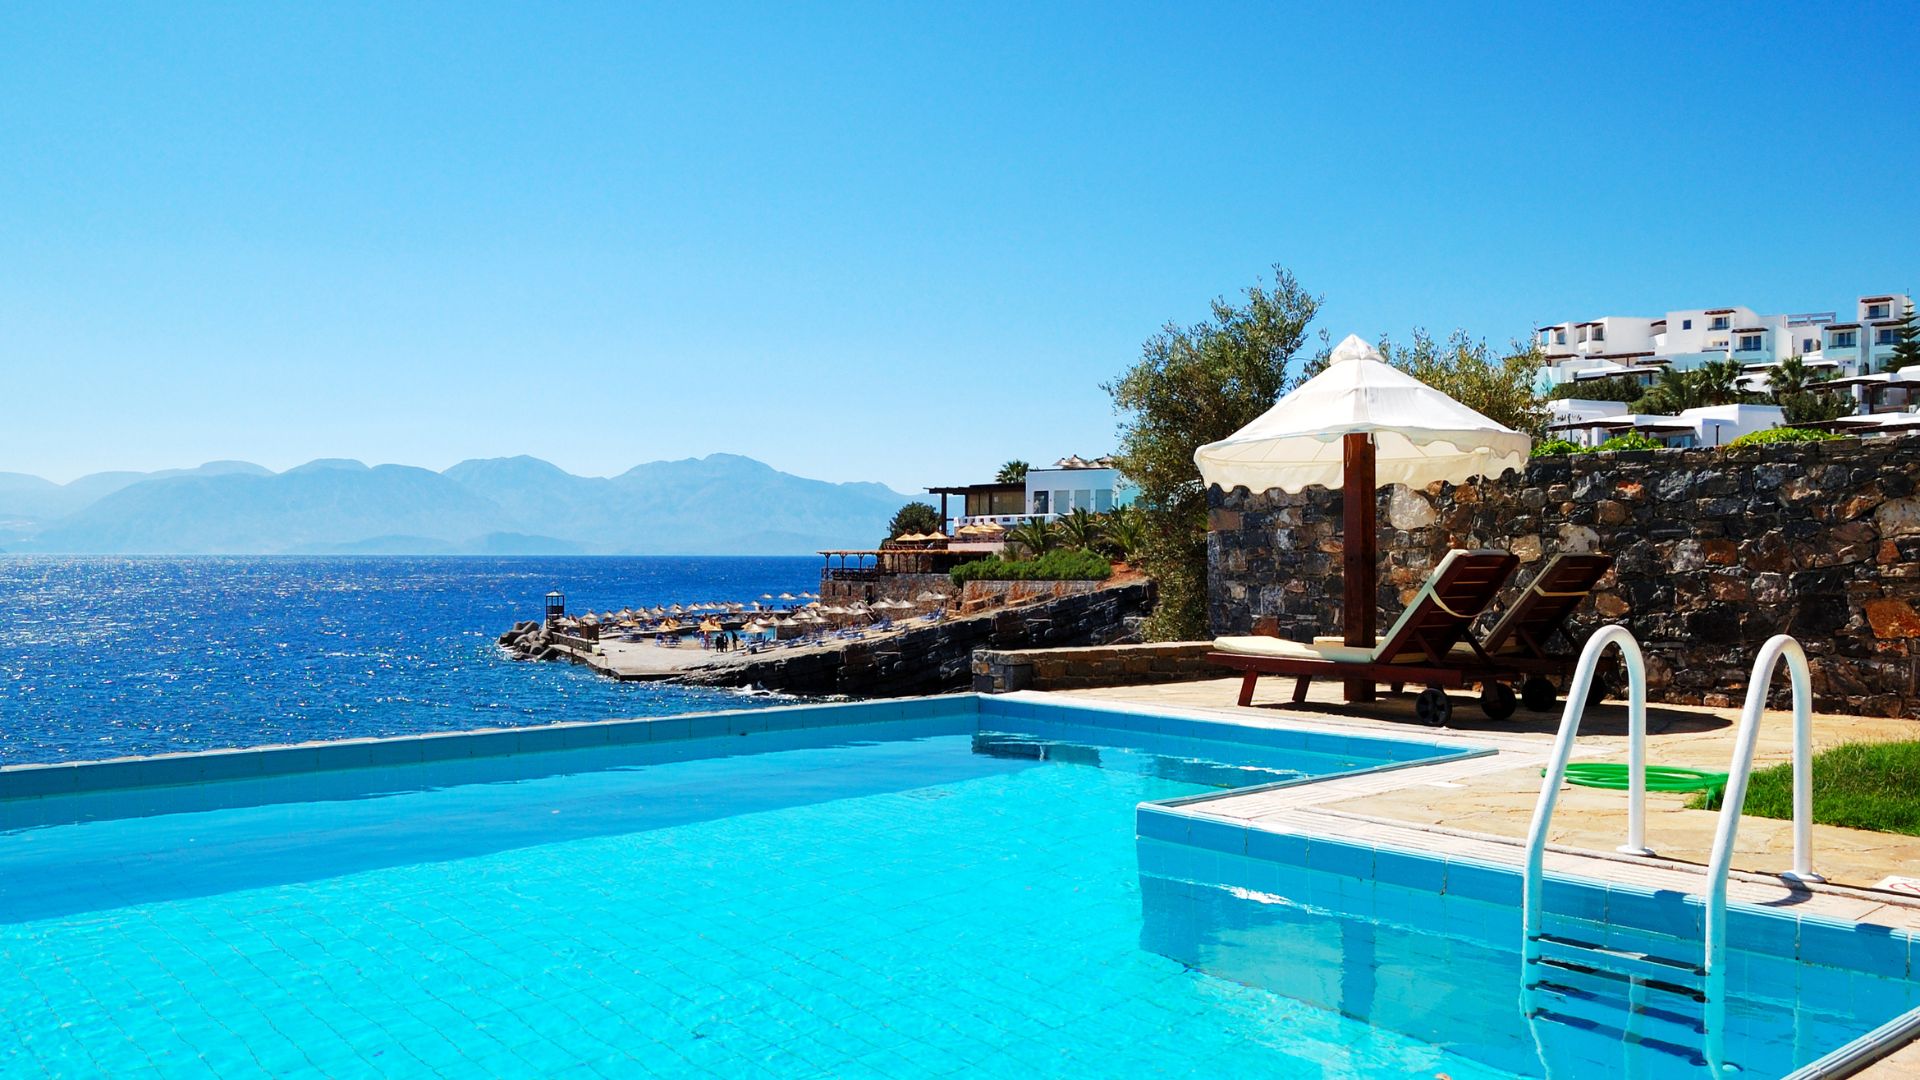 Private villas in Crete with pools-Vivestia | Risk-Free Villas, Hotels and Cruises in VR